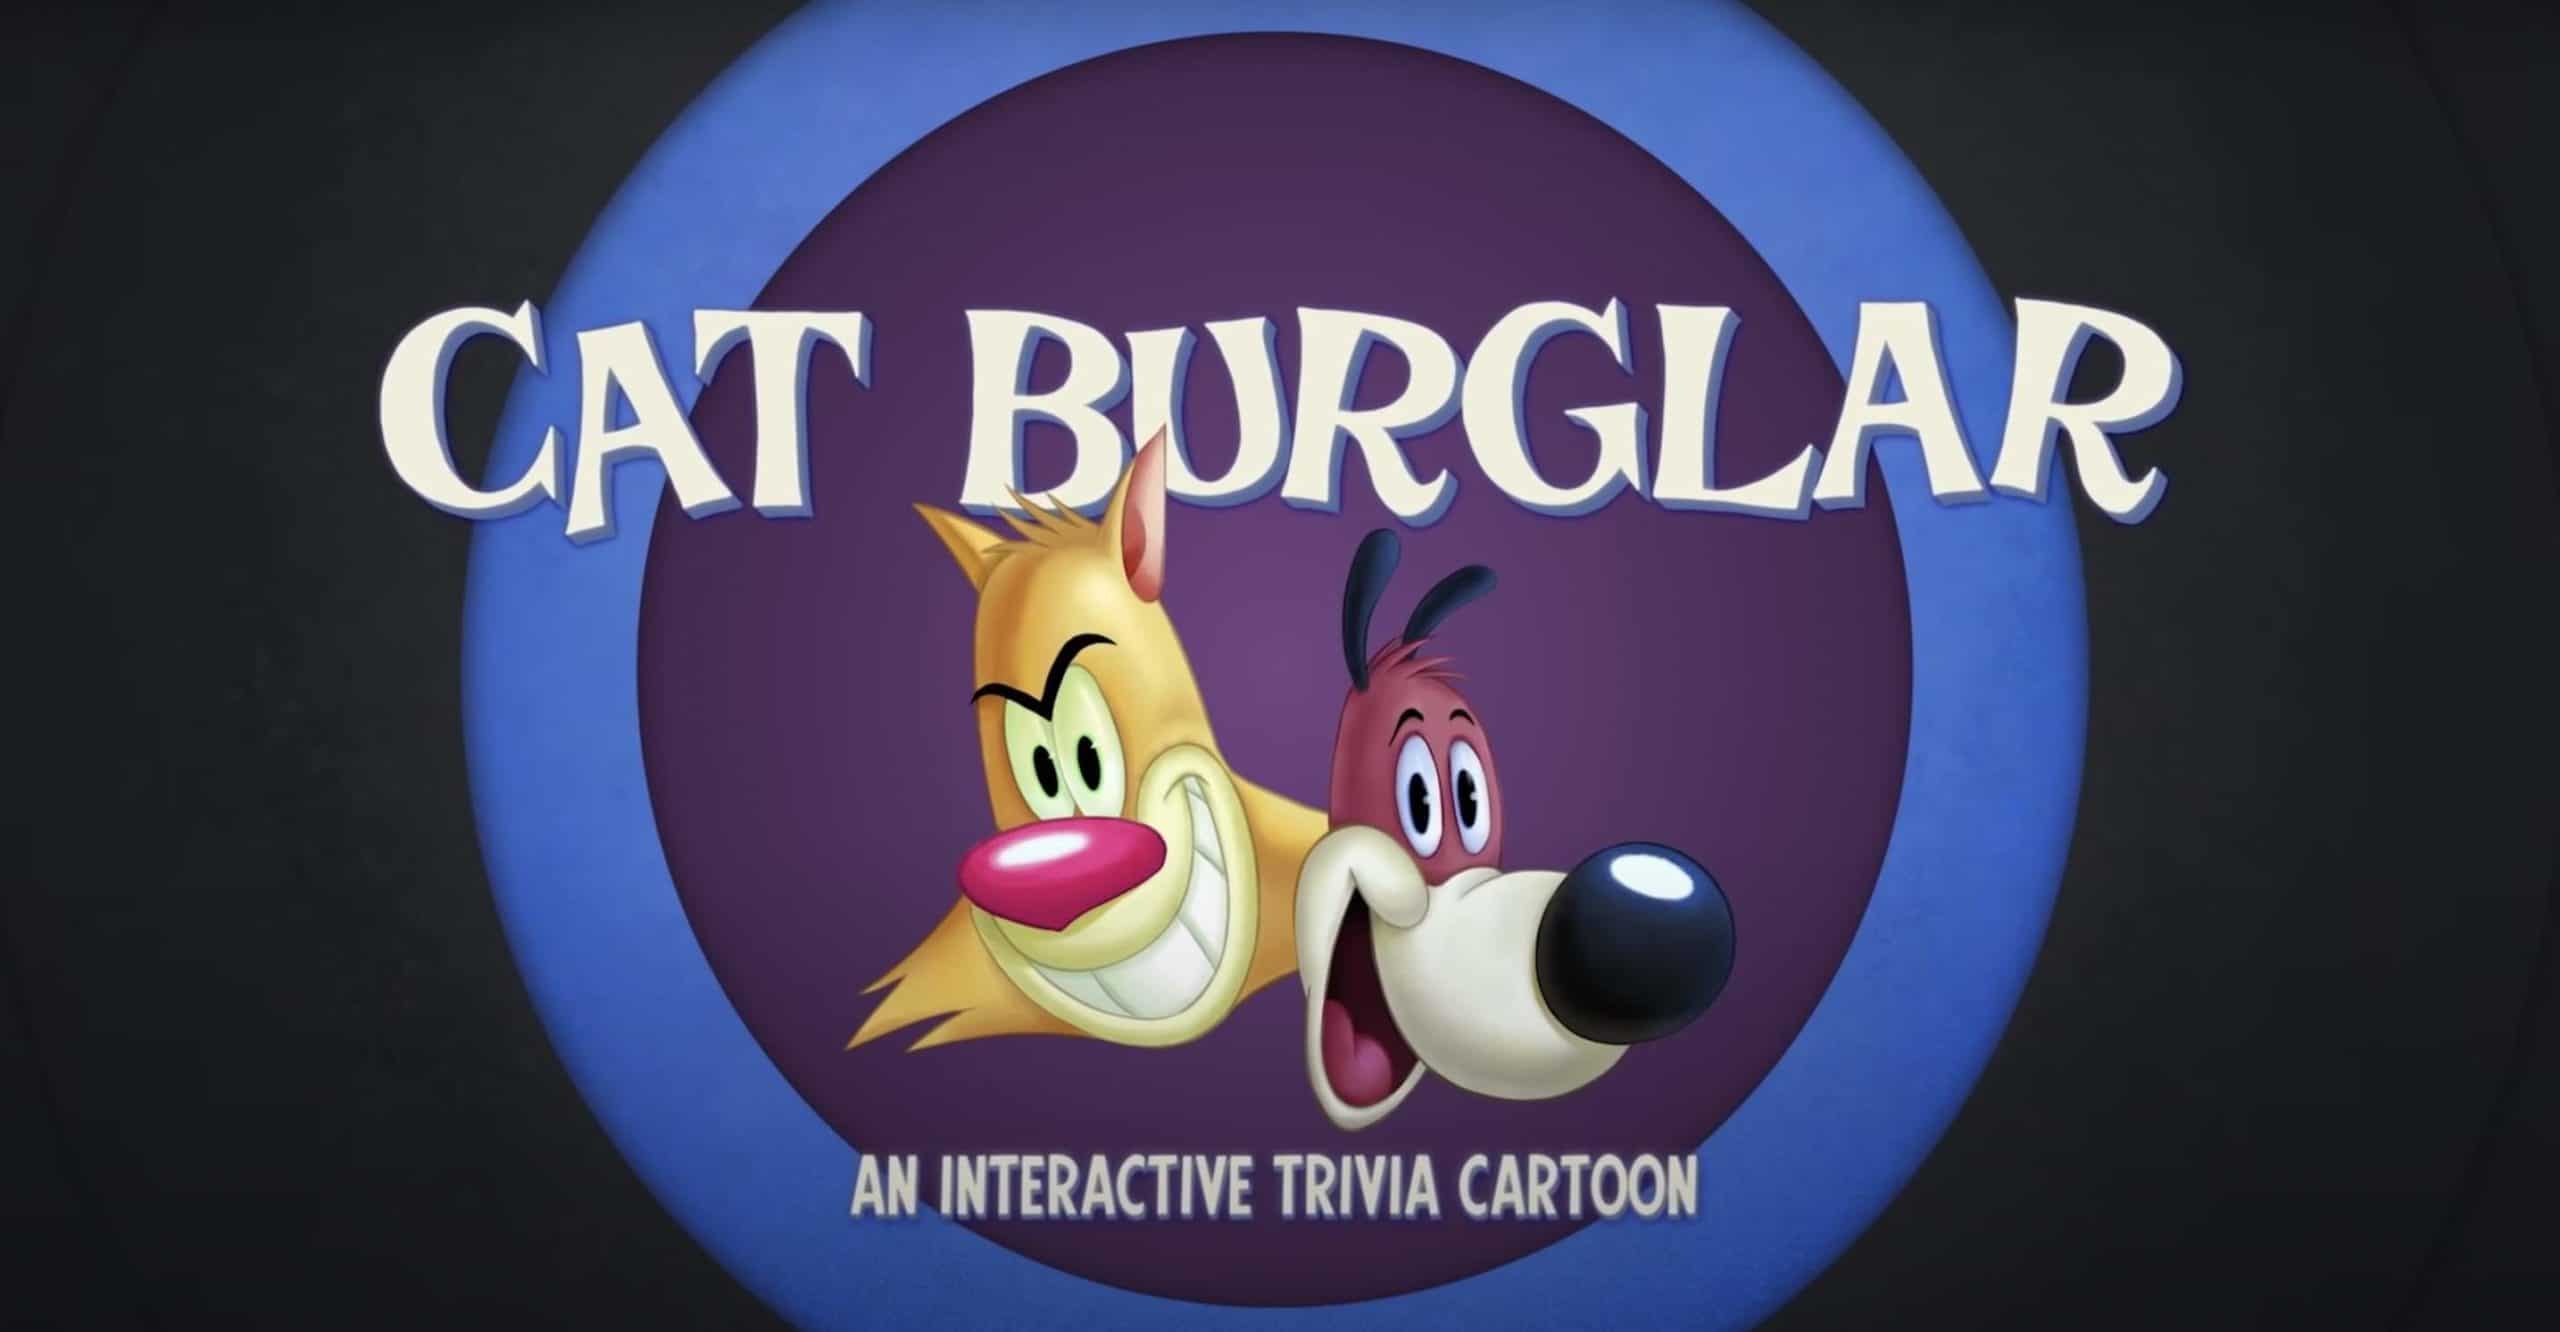 Netflix releases new interactive show: 'Cat Burglar' lets viewers